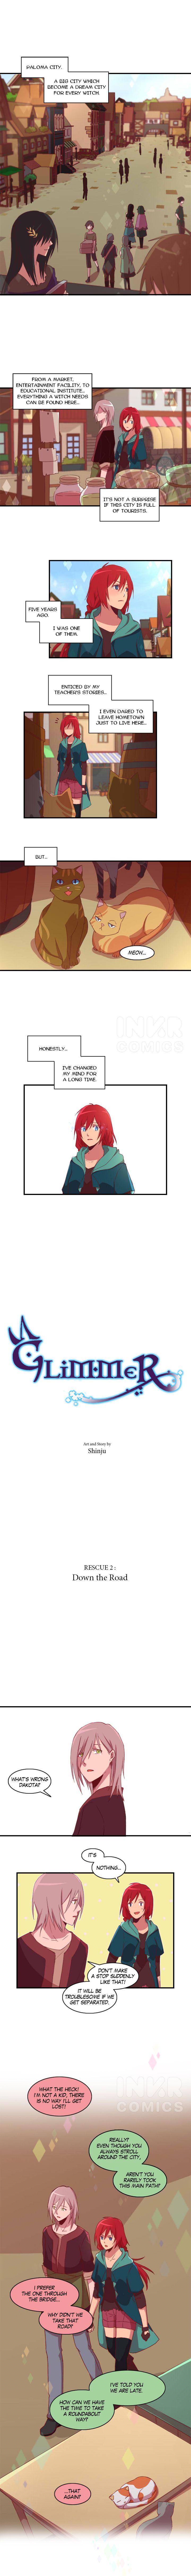 Glimmer 2